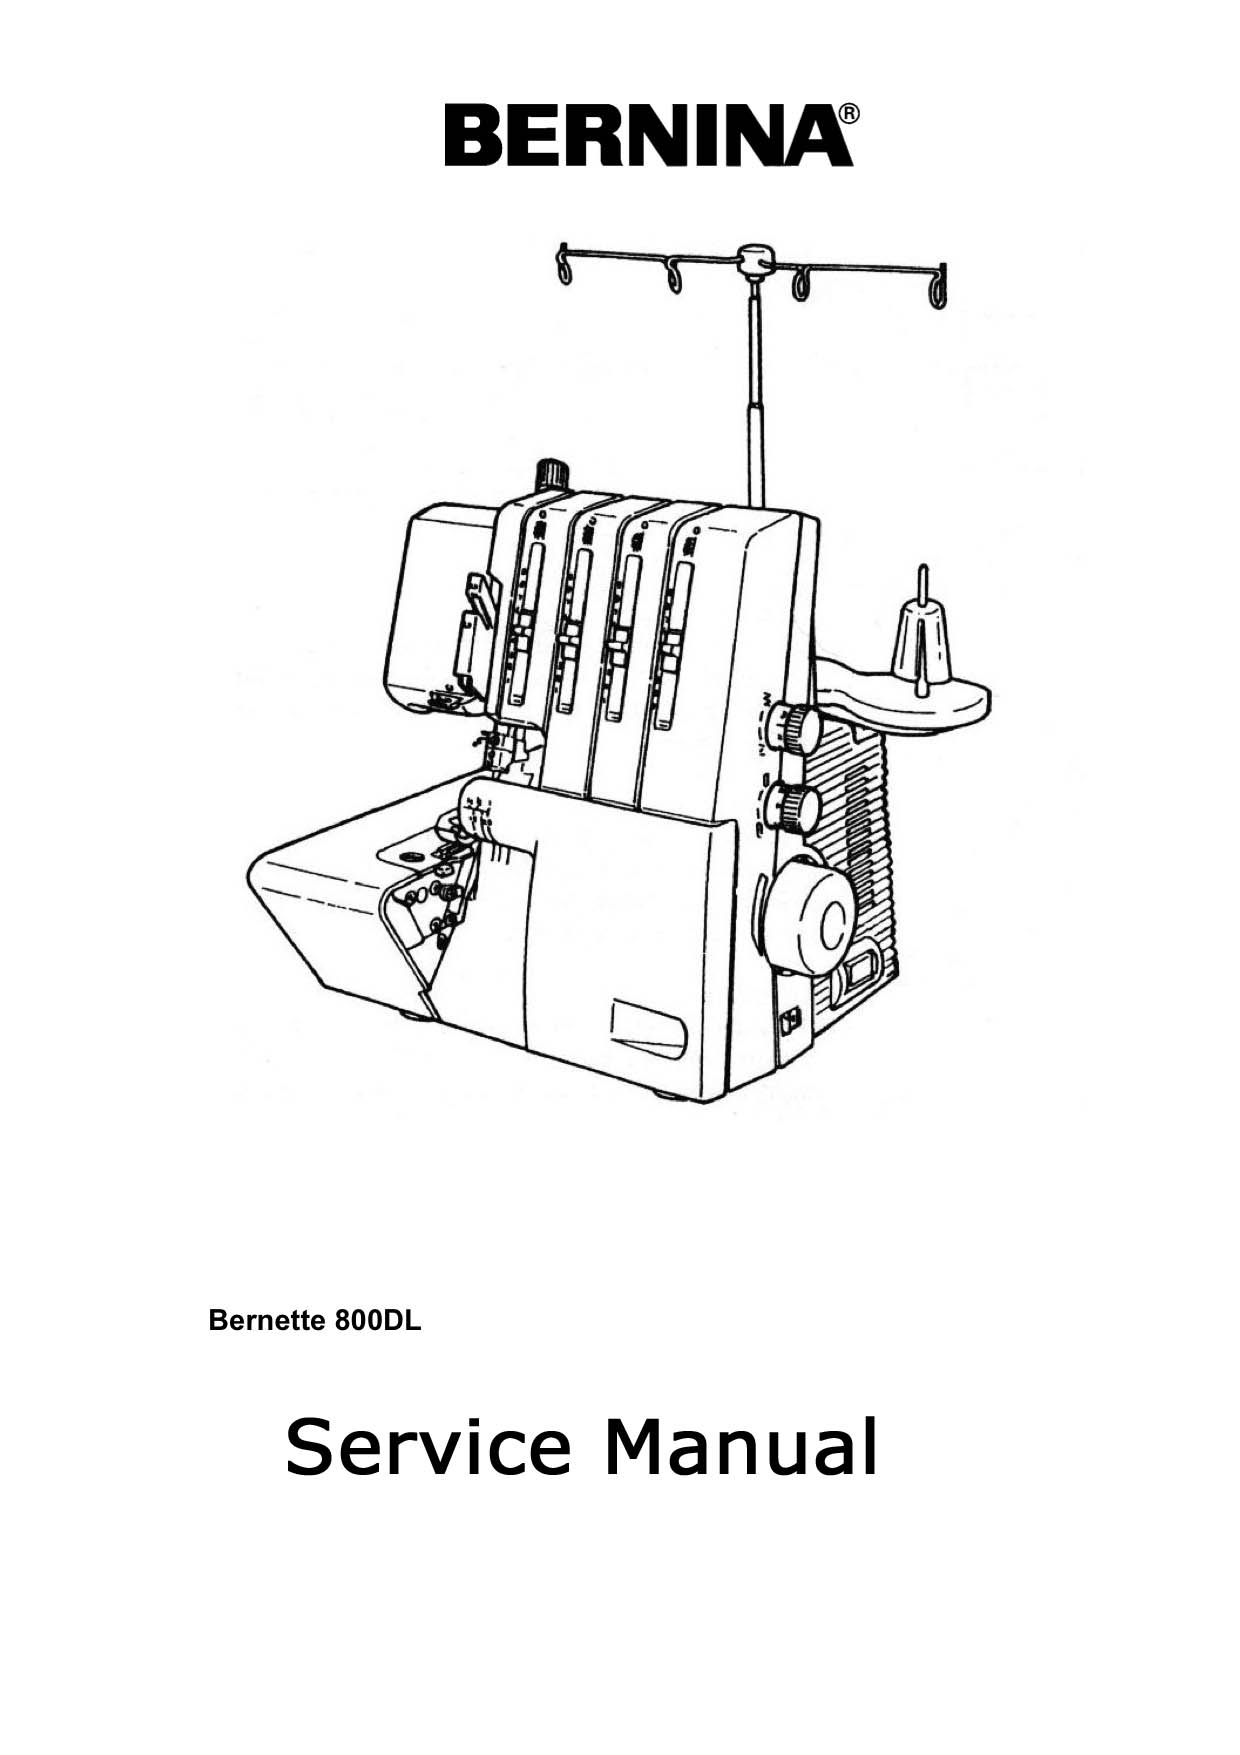 Service Manual For Bernina 800D, 800DL Serger Machine